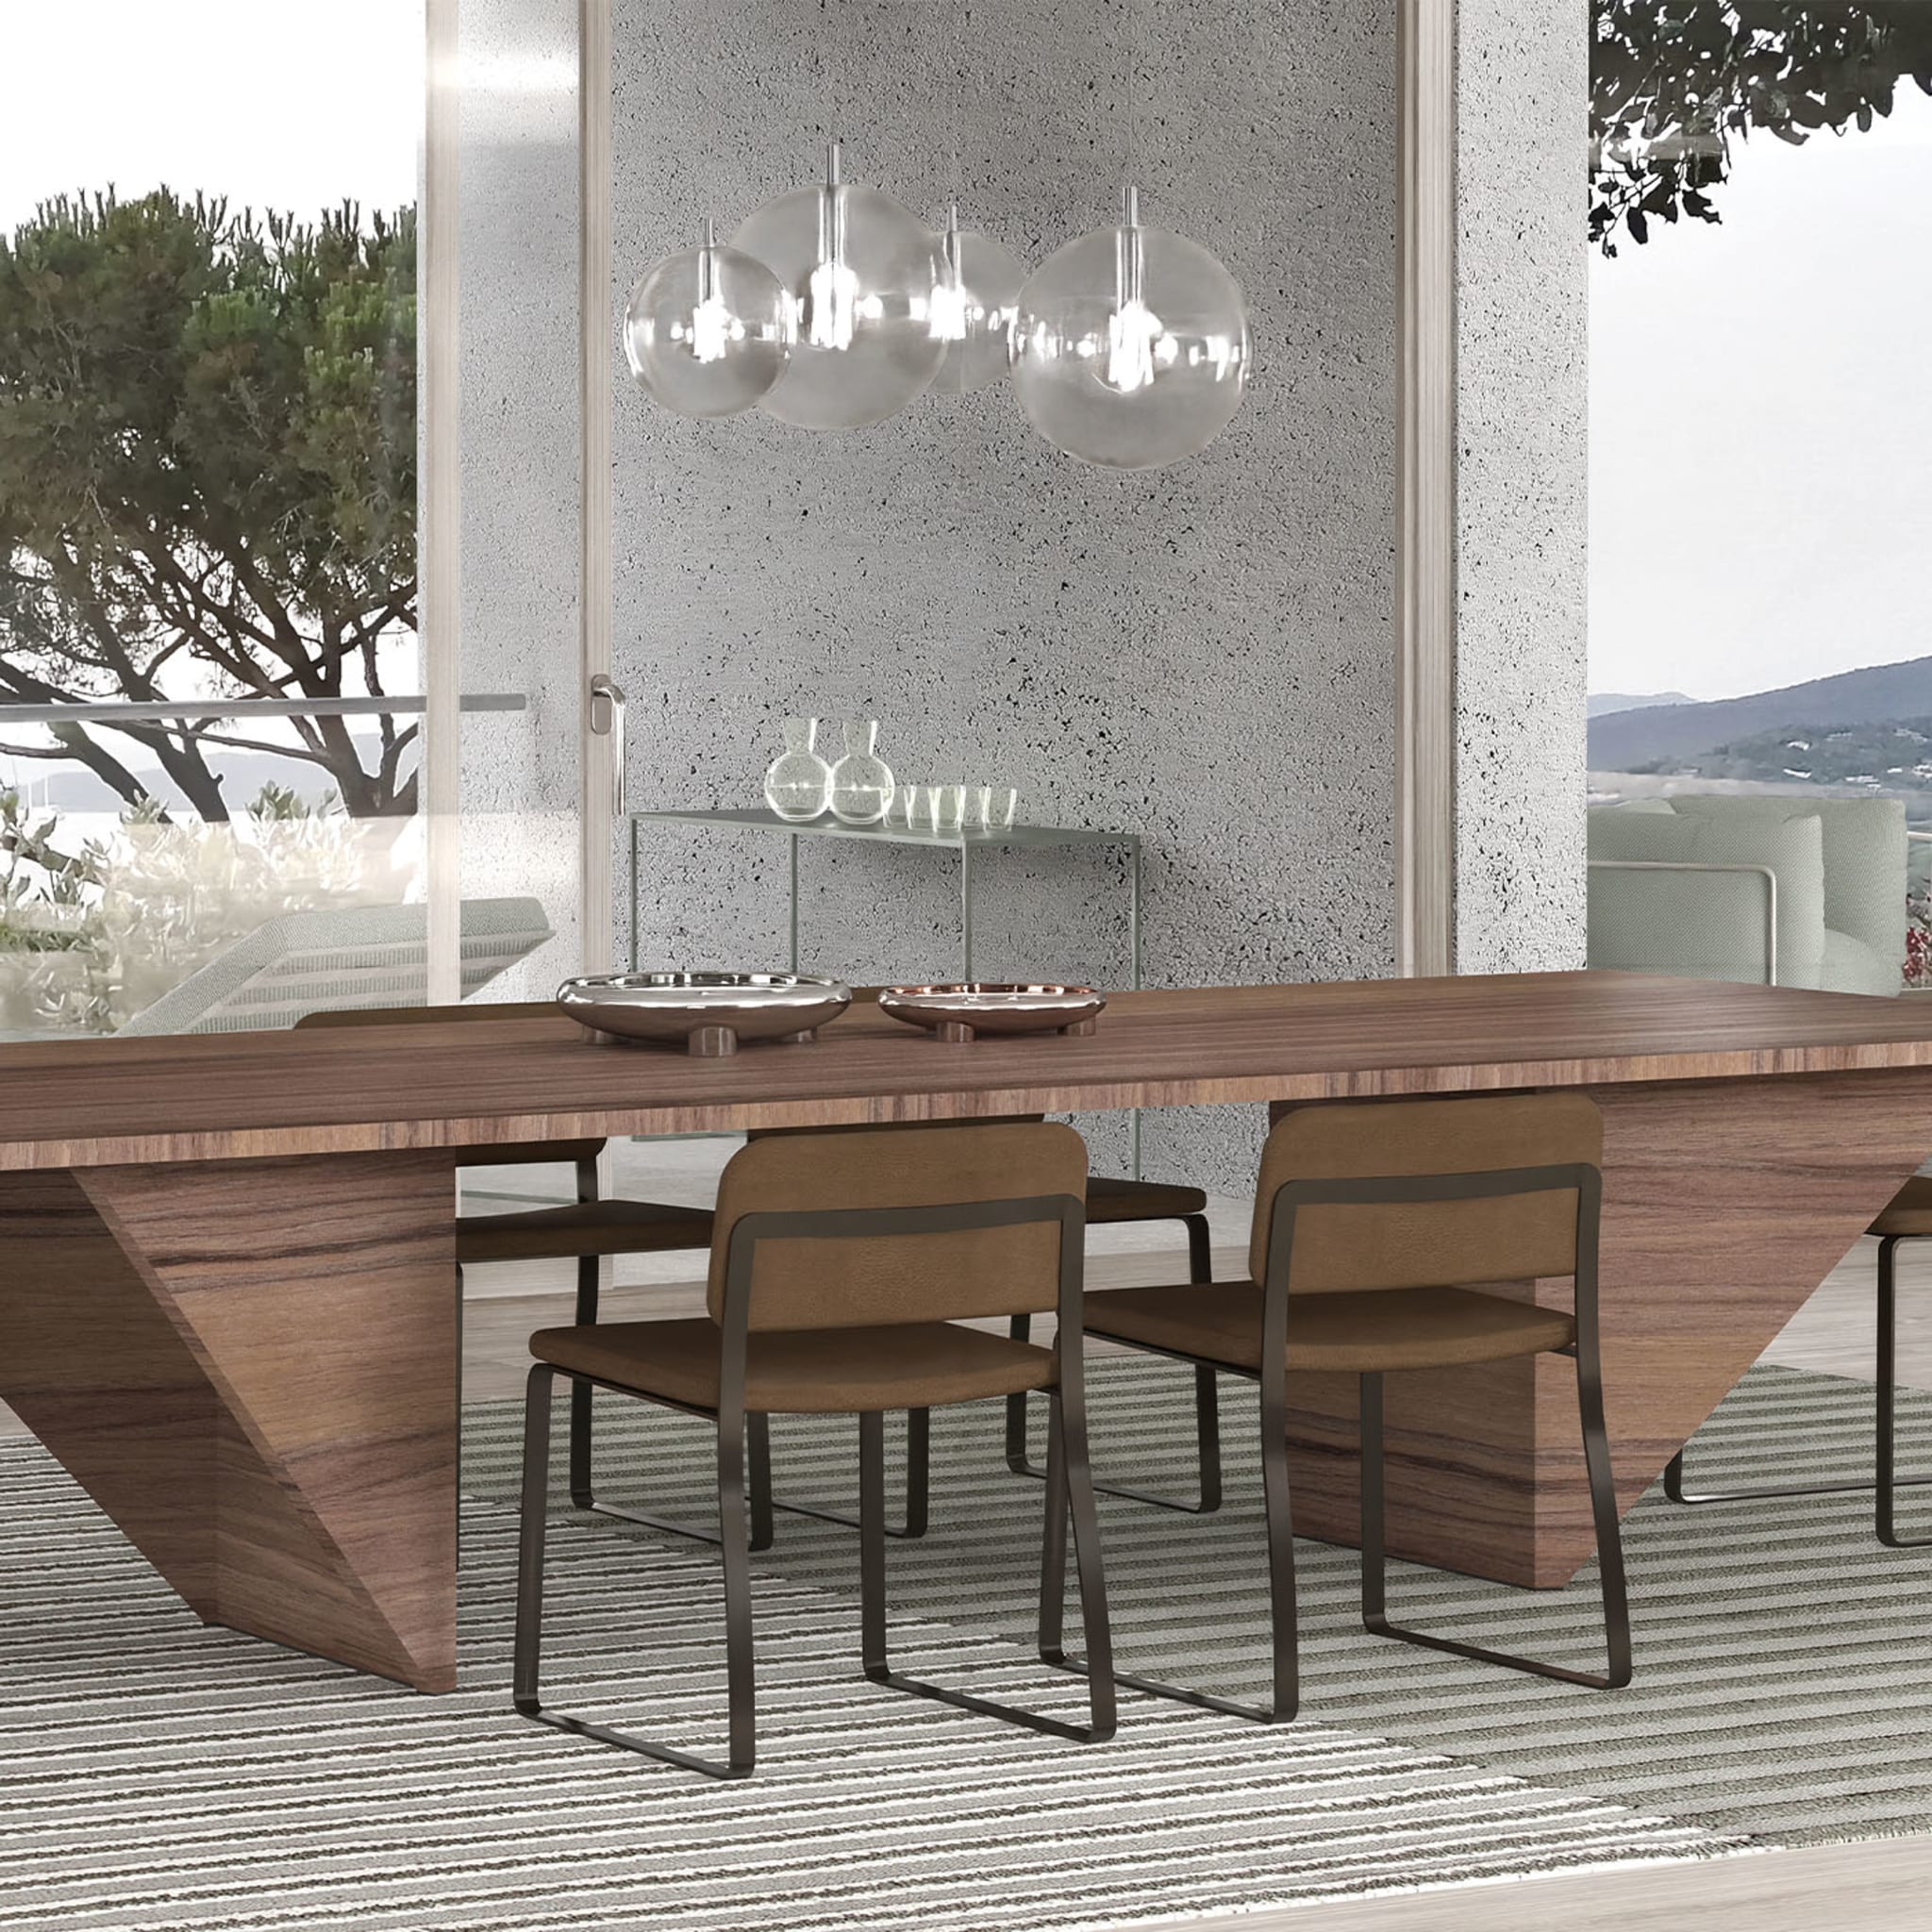 PAR.XR Wood Dining Table - Alternative view 3